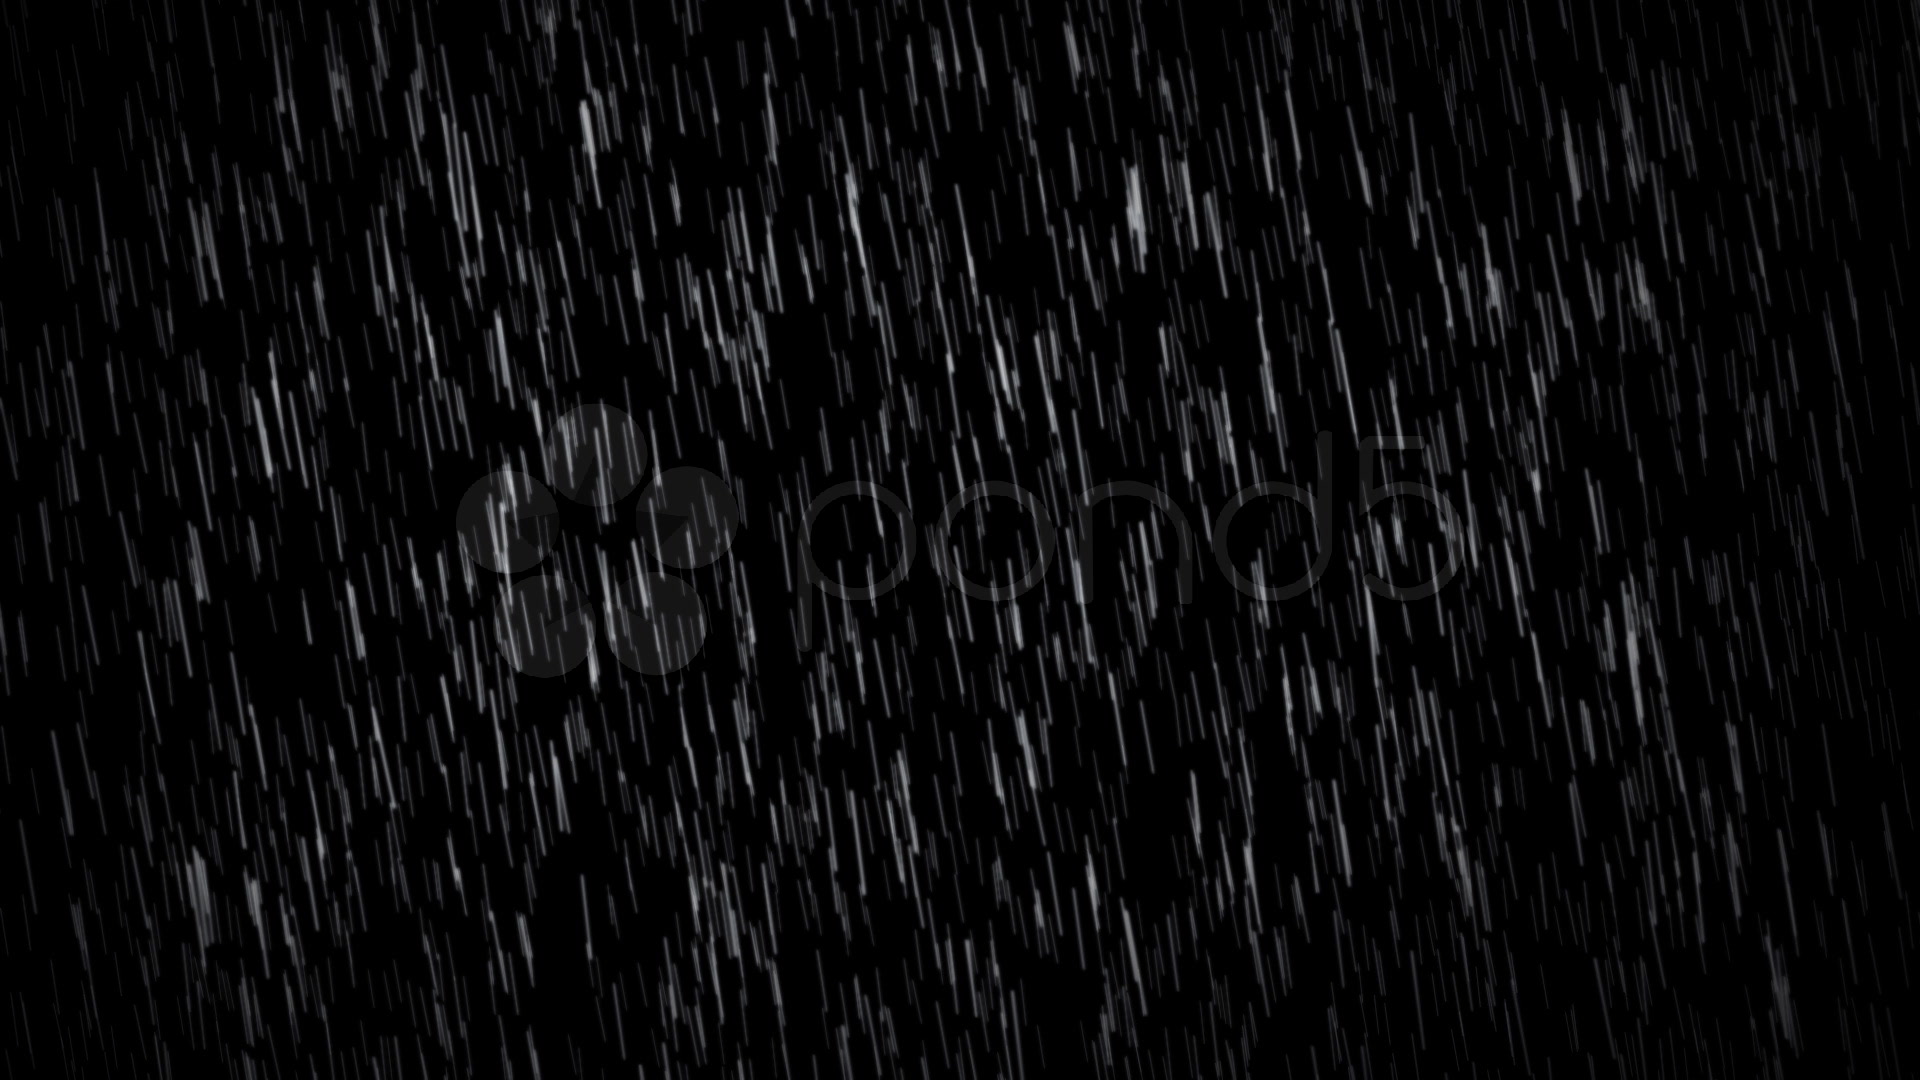 Rain effect. Дождь на черном фоне. Текстура дождя. Эффект дождя. Ливень на черном фоне.